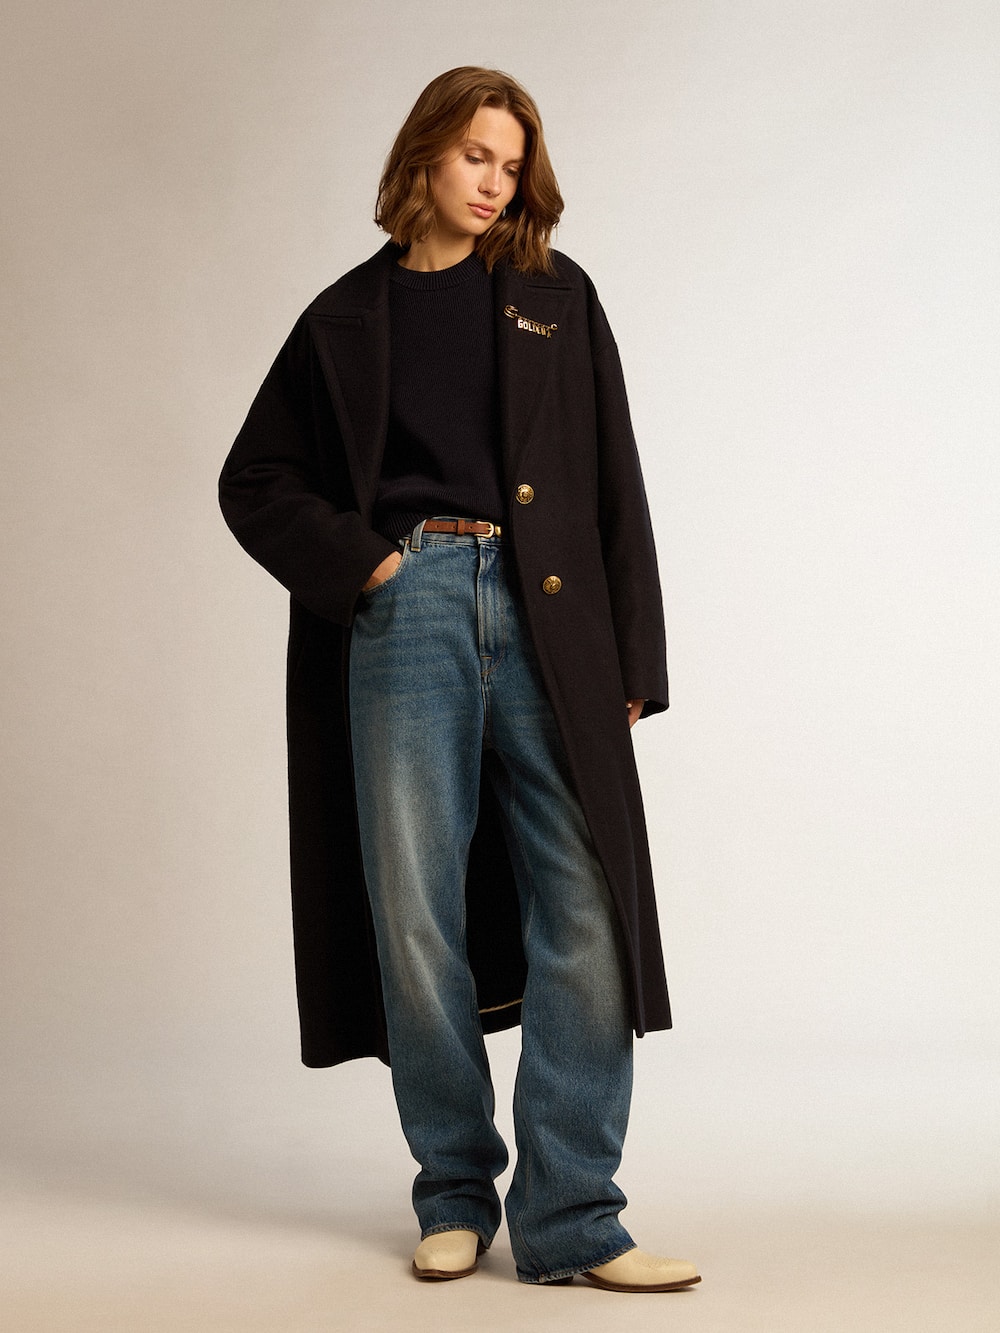 Golden Goose - Calça jeans feminina com lavagem média in 